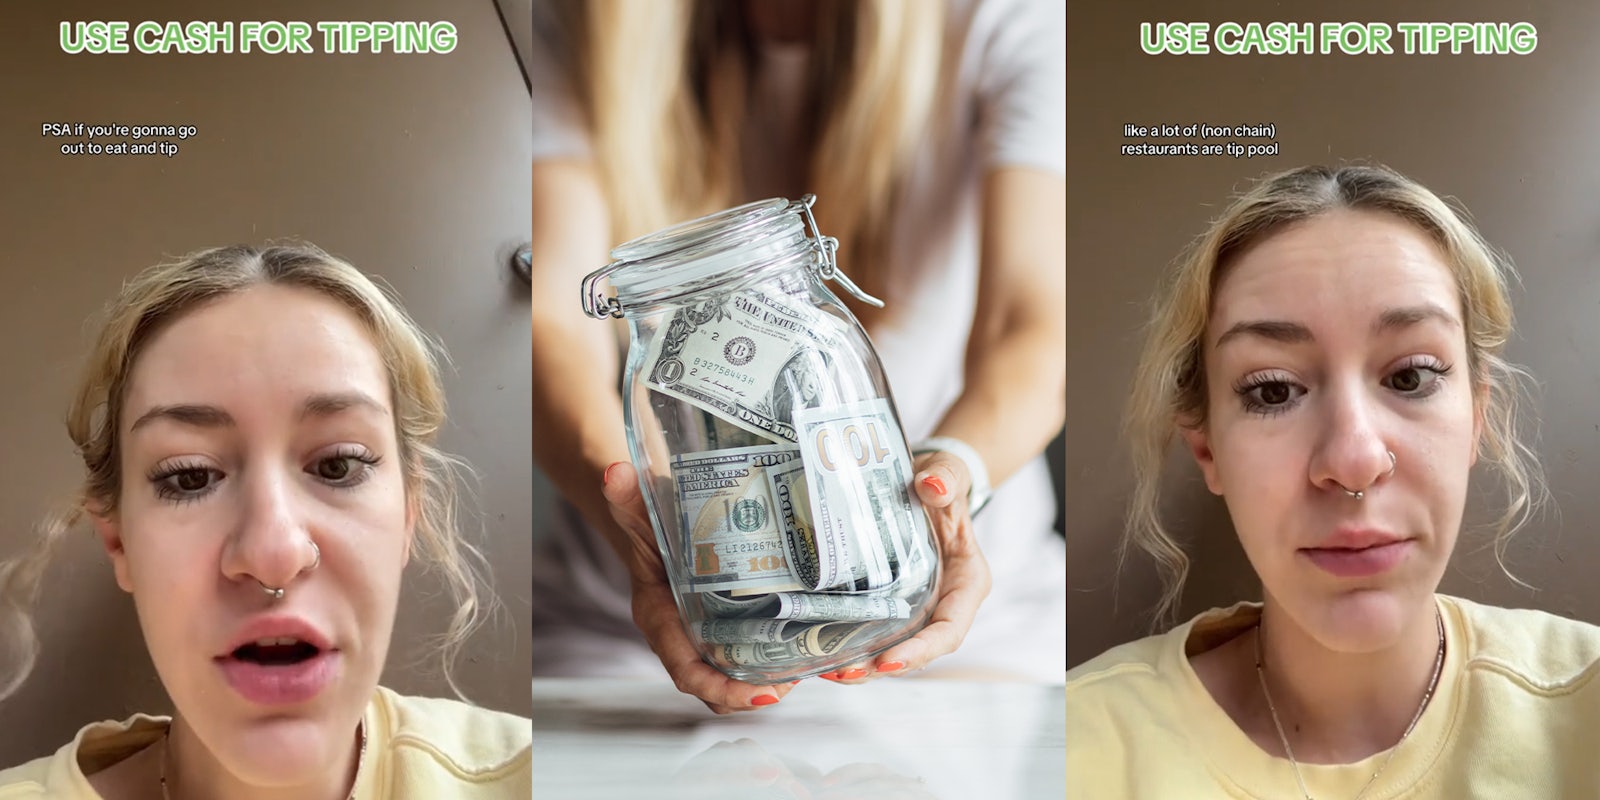 Woman wearing yellow T Shirt; Woman holding a jar of tip money.